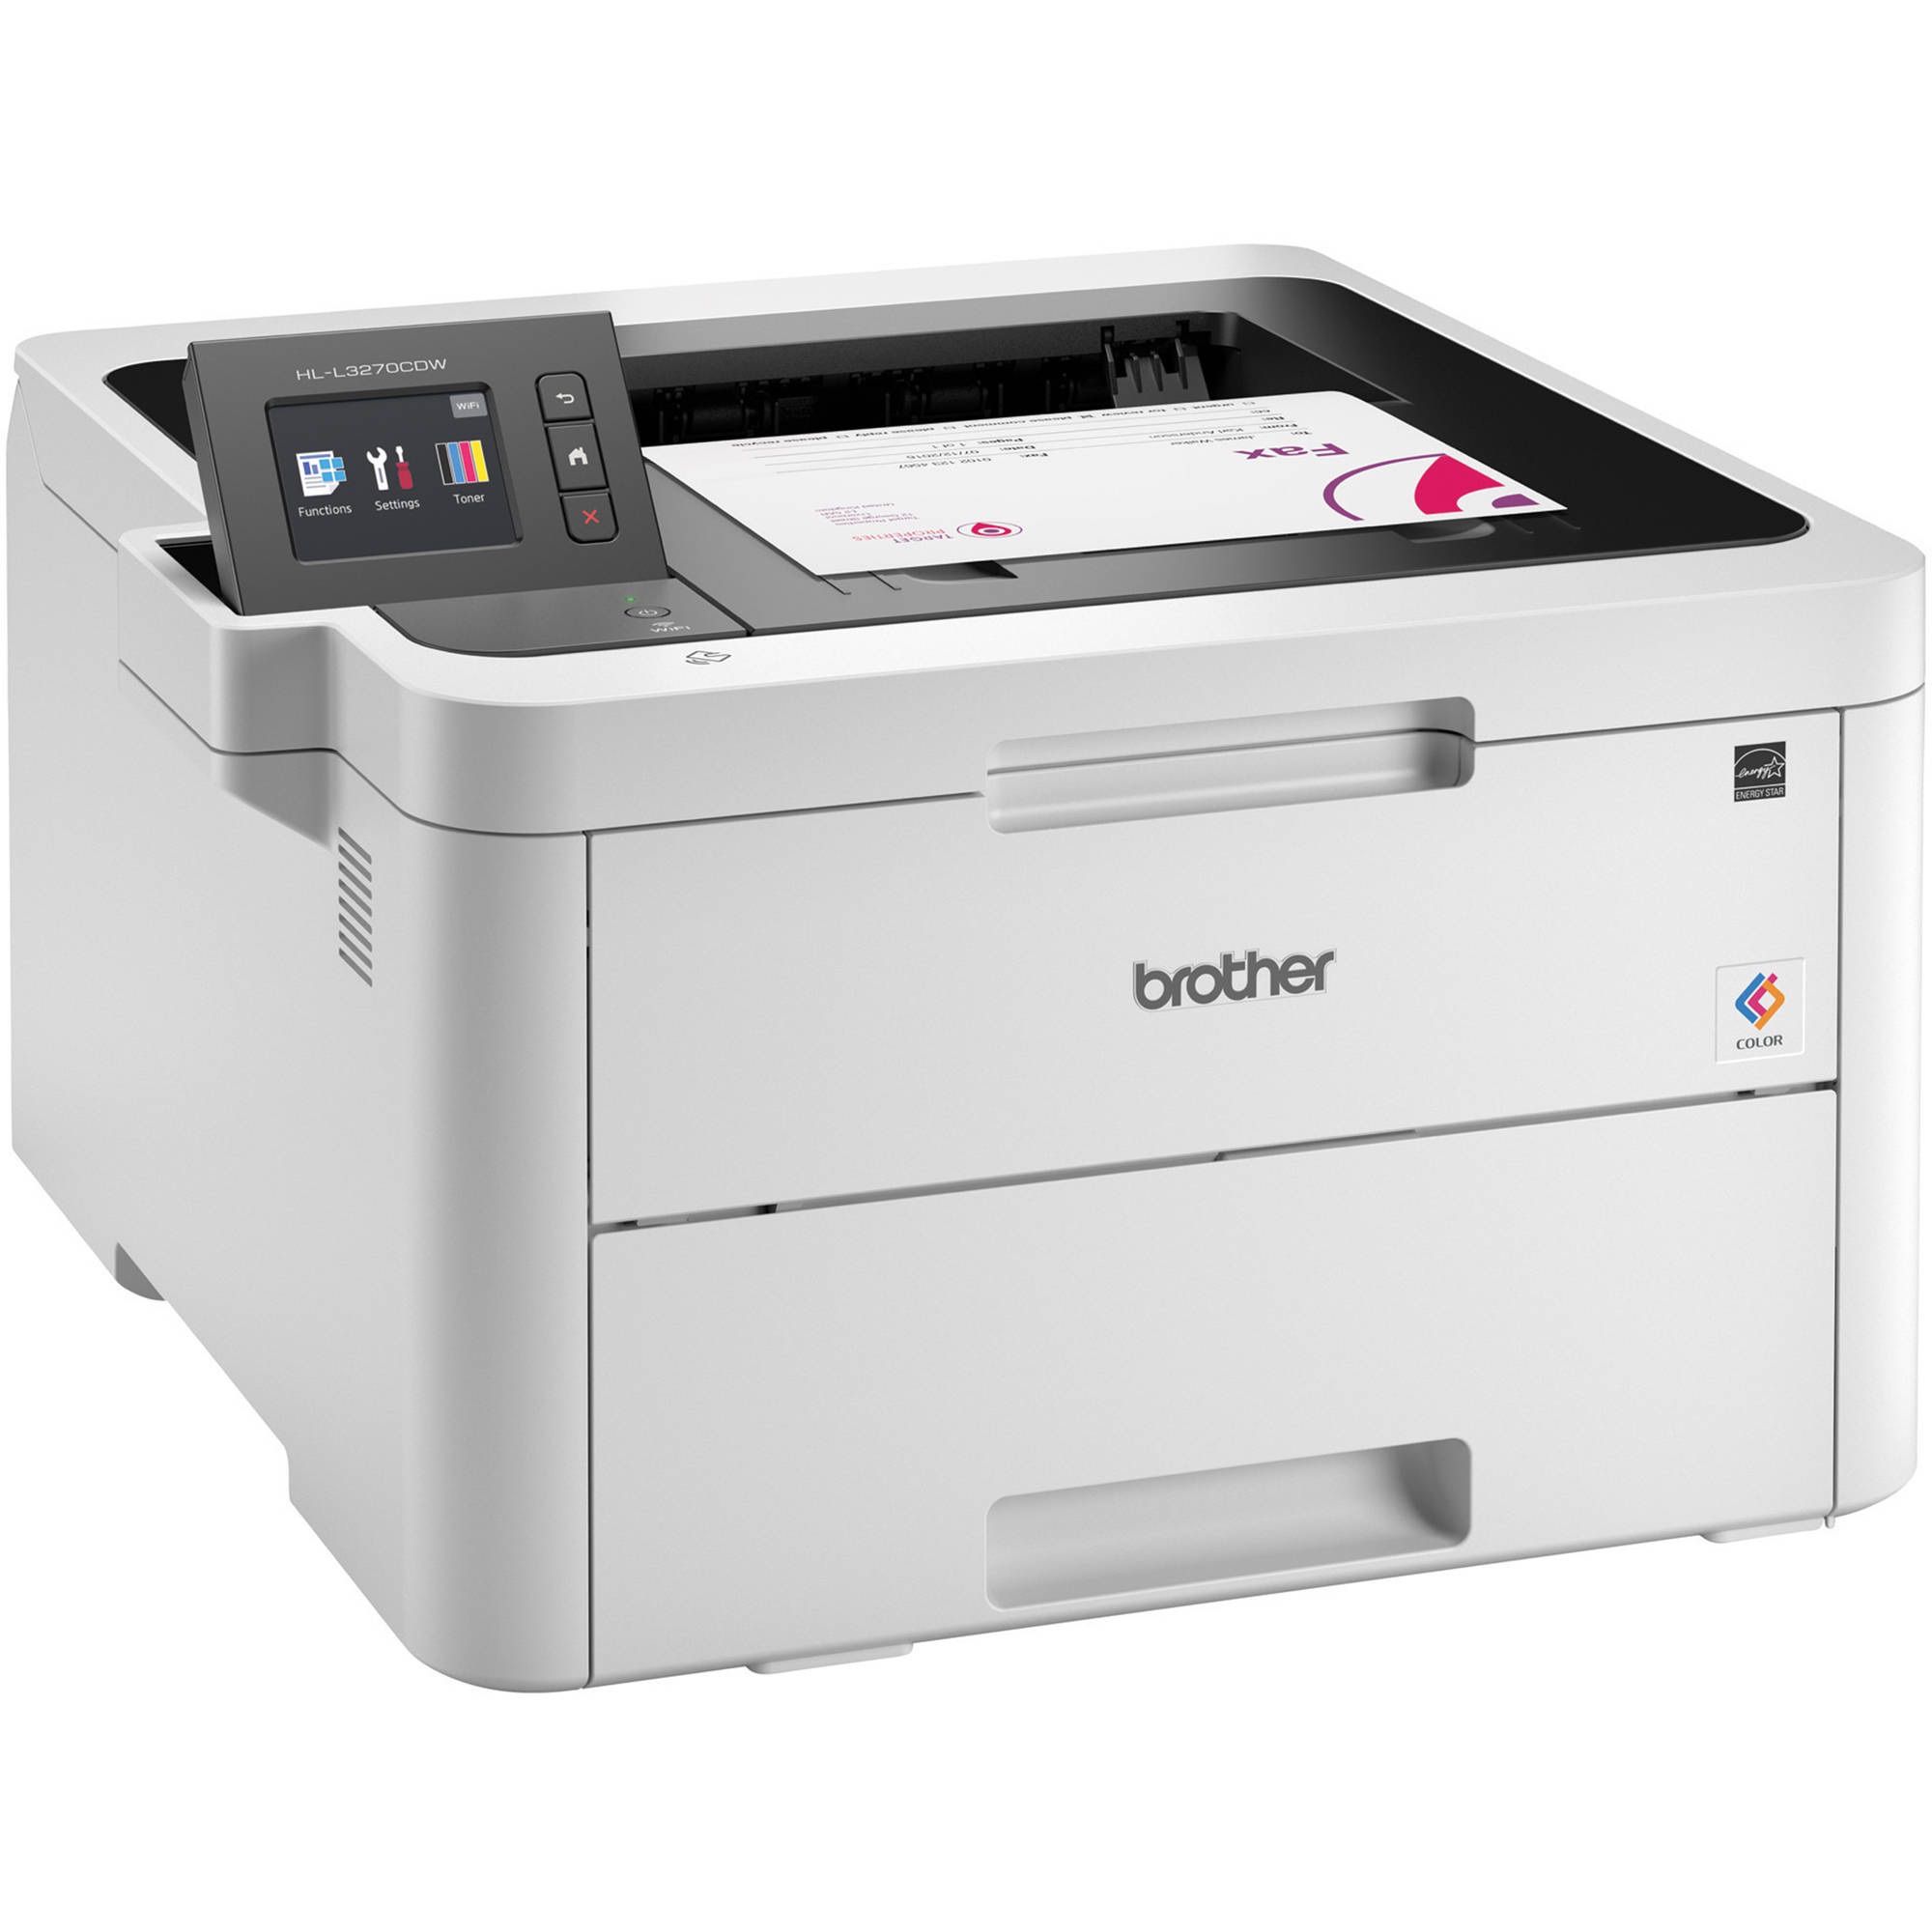 Brother HL-3270CDW Color Laser Printer OPEN BOX